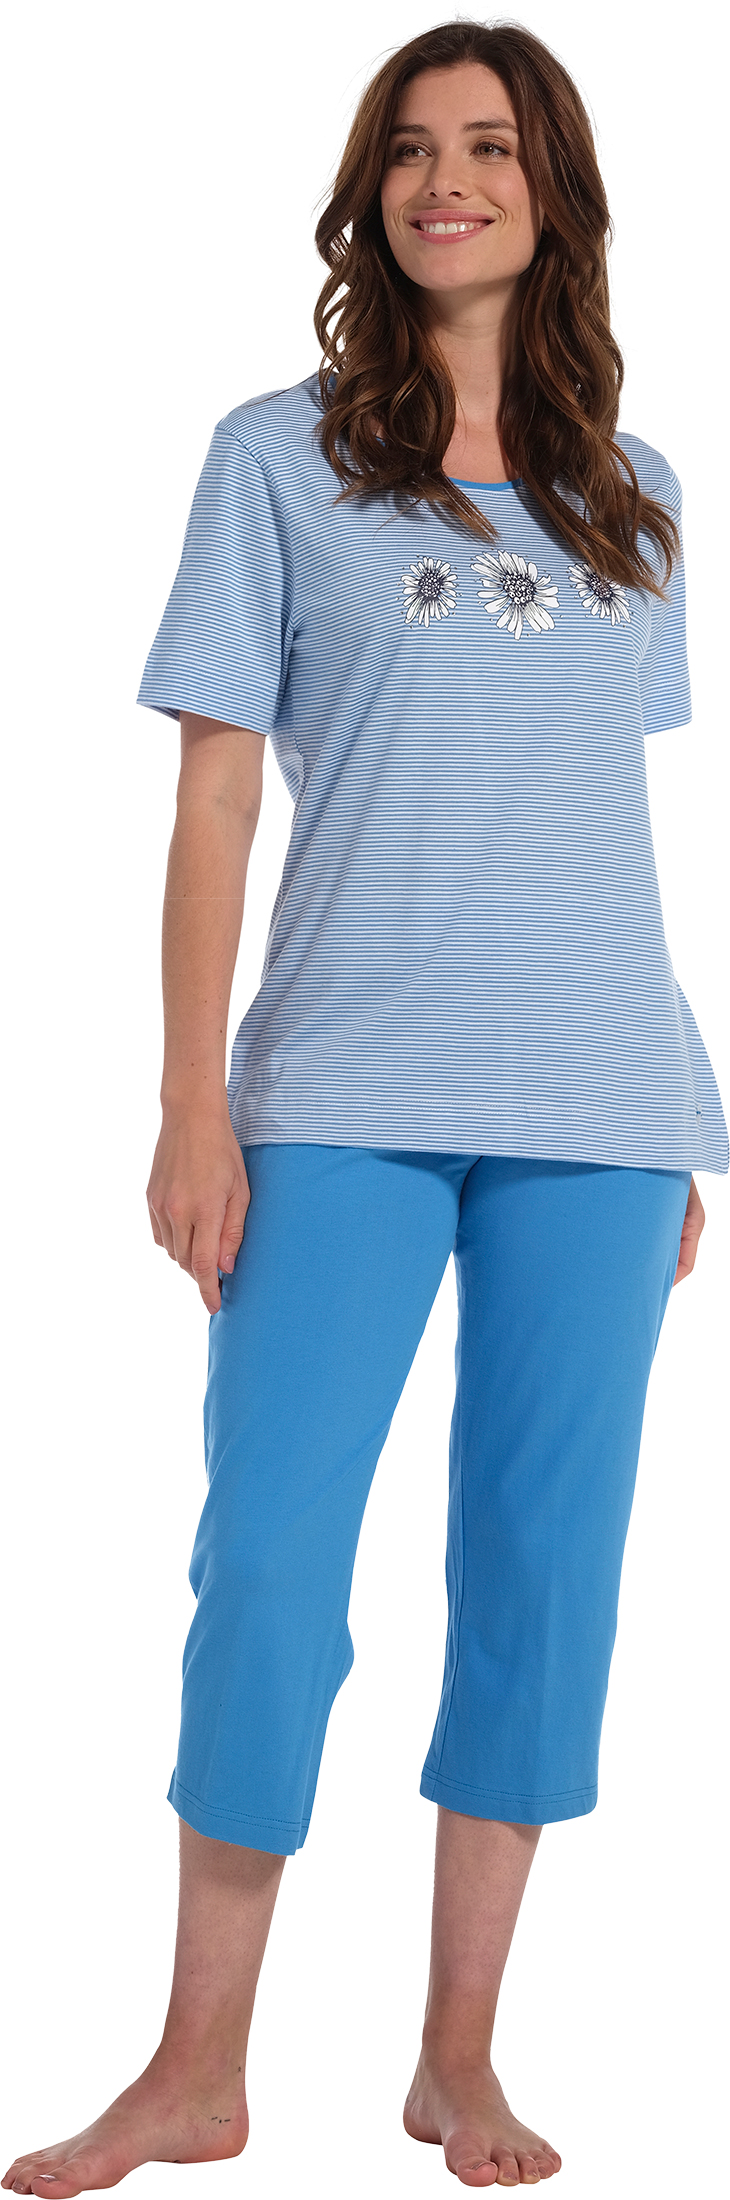 Pastunette dames pyjama capri 20231-130-2 - Blauw - 52